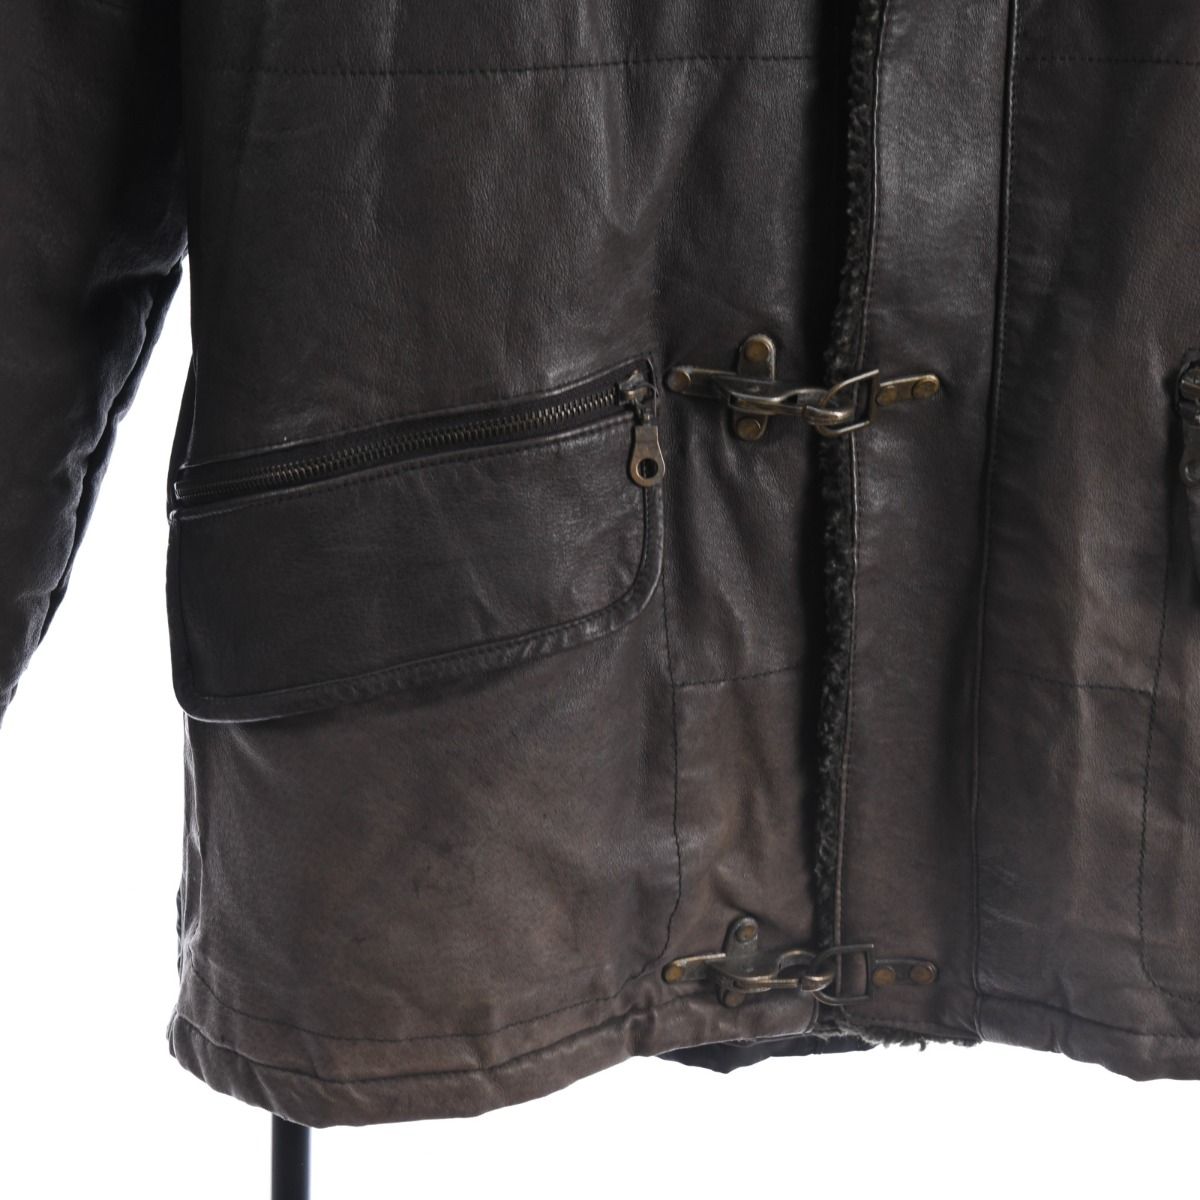 Vintage Barneys 1980s Leather Panelled Jacket